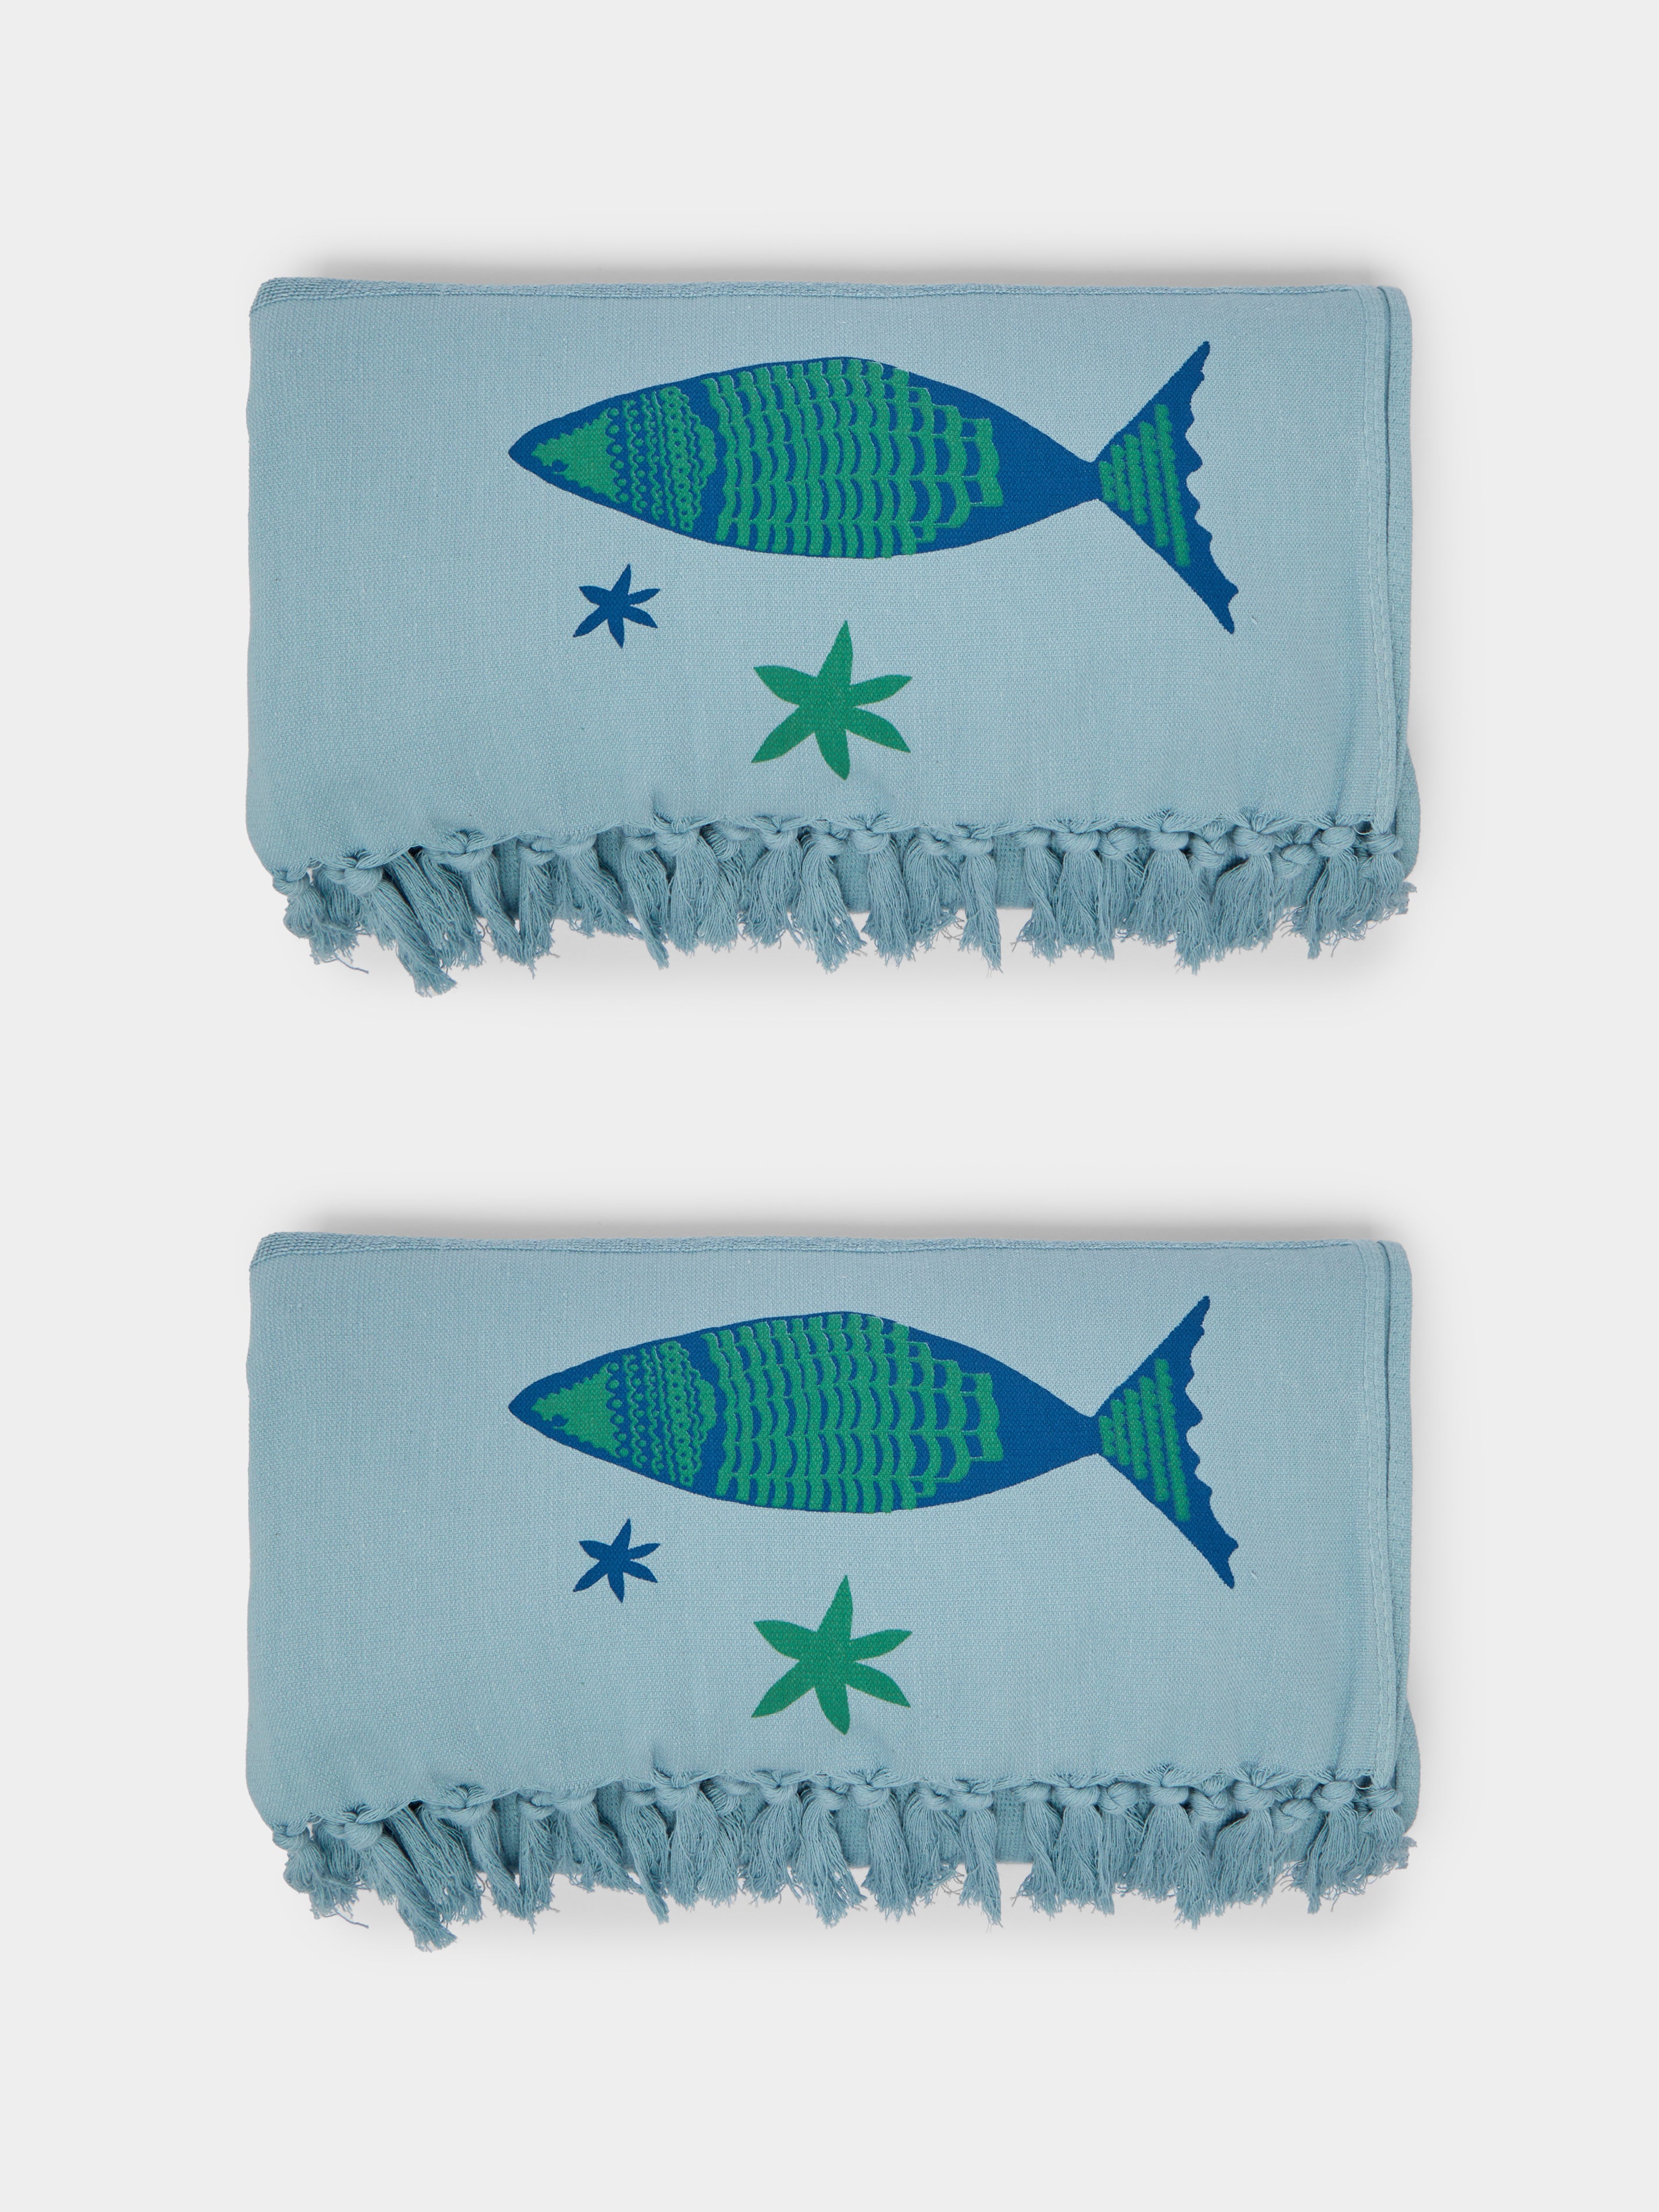 Big Fish Hand-Printed Cotton Beach Towels (Set of 2)